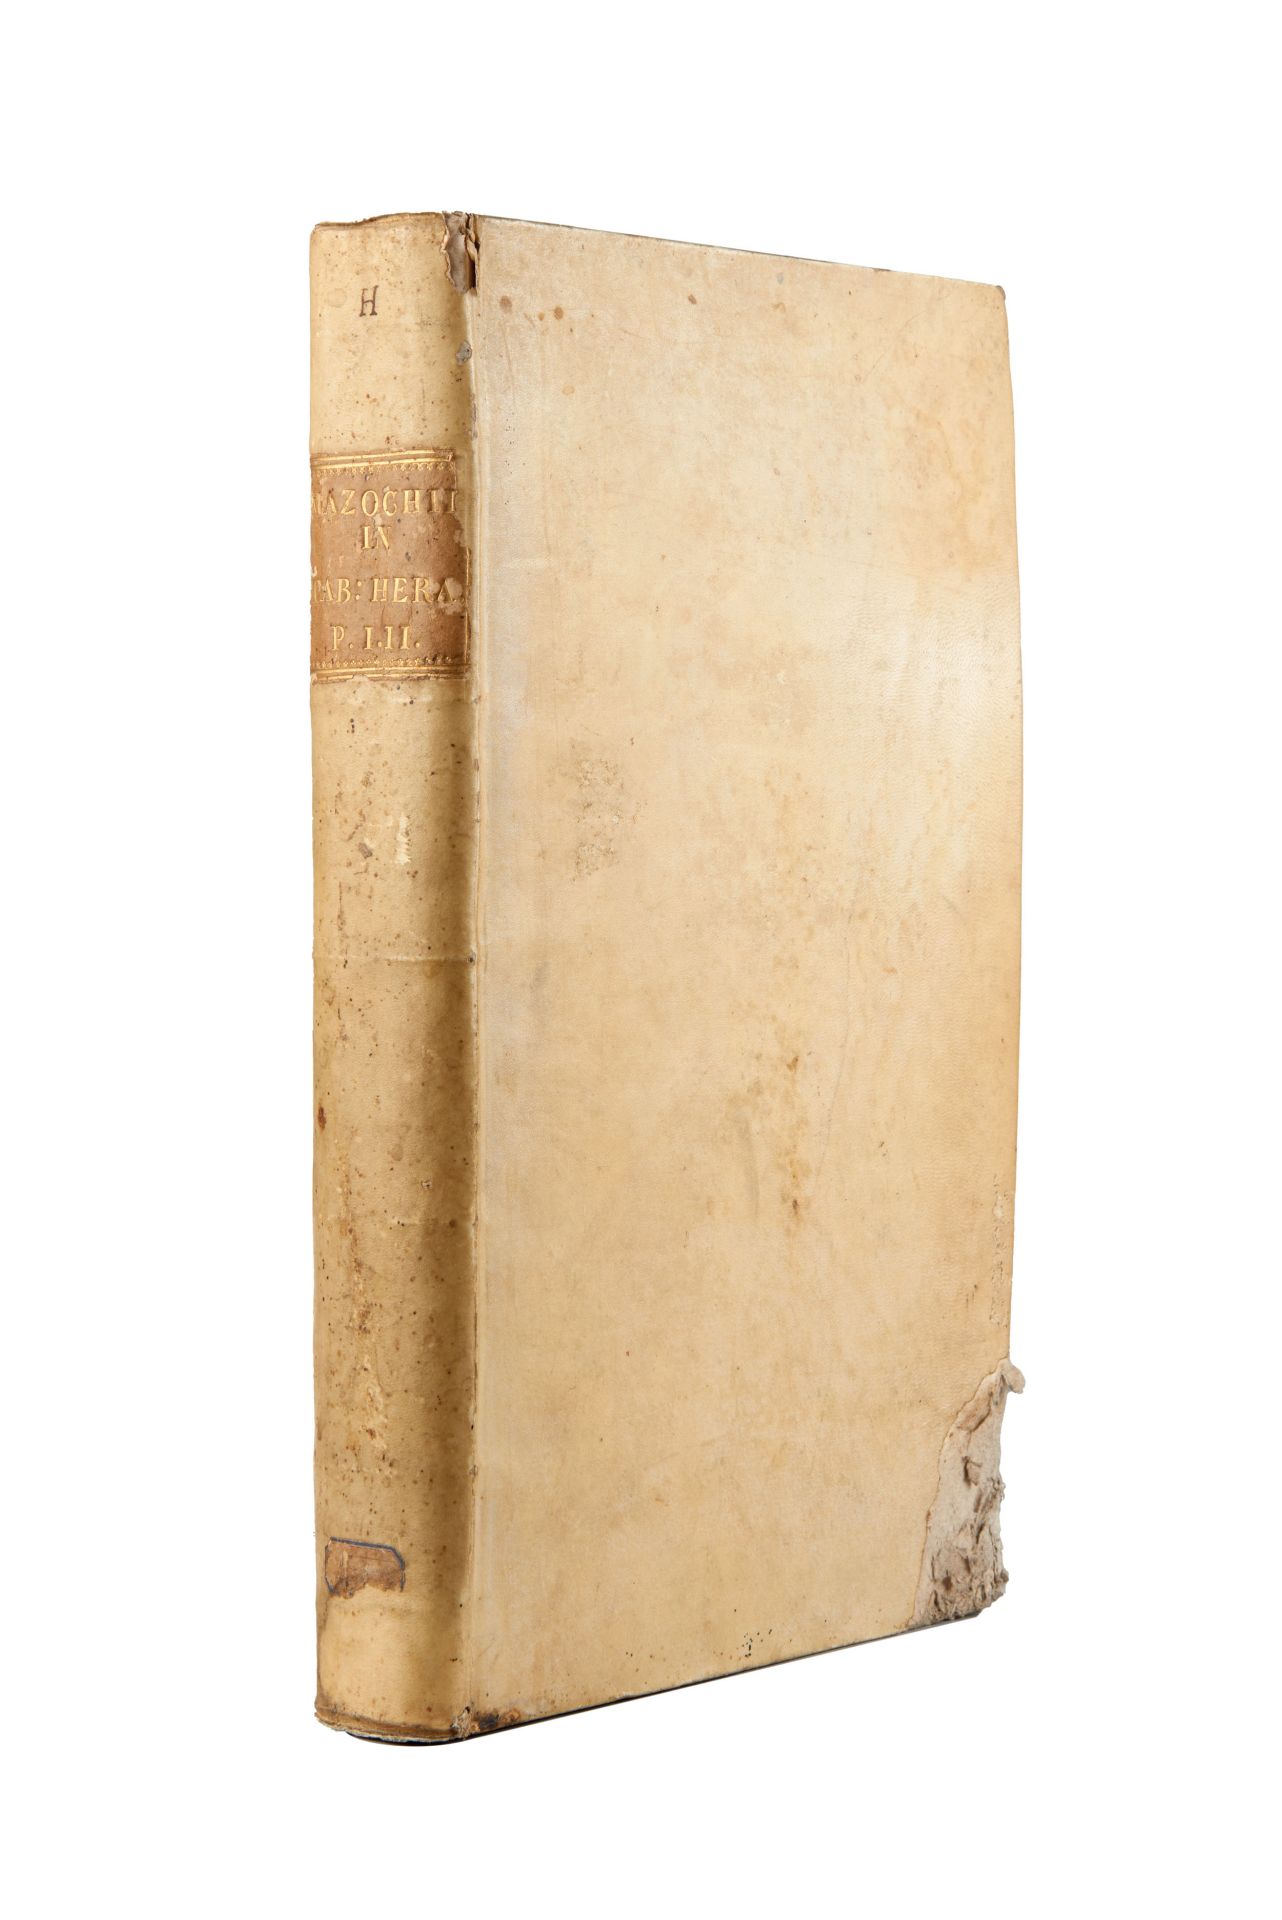 MAZZOCCHI, Alessio Simmaco (1684-1771). Commentariorum in regii herculanensis musei aeneas tabulas - Image 2 of 2